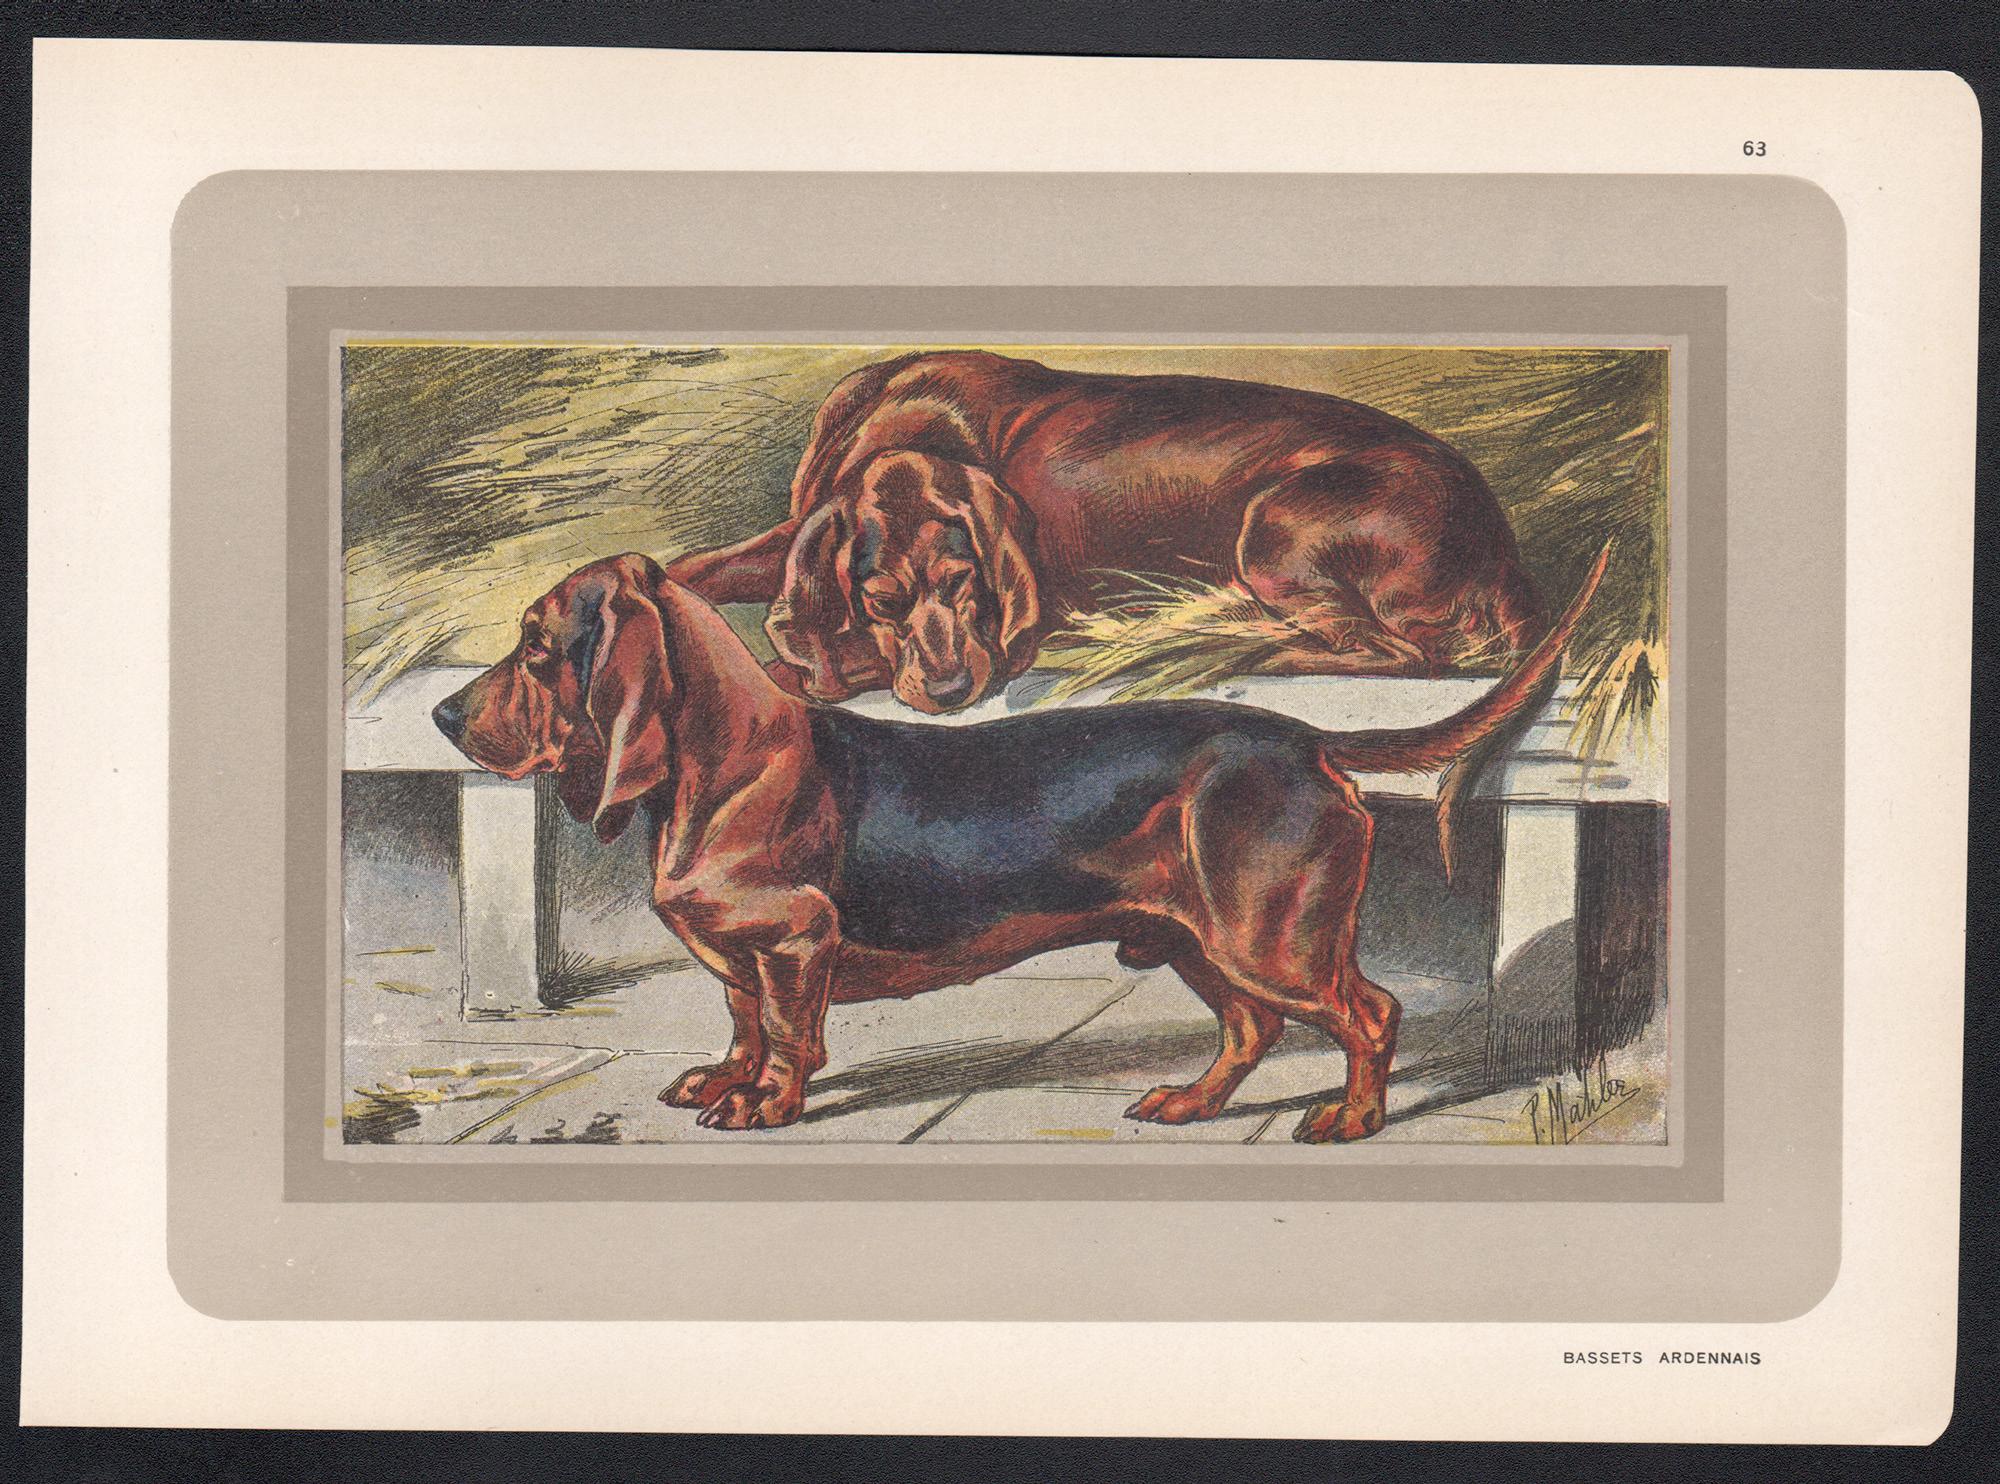 Bassets Ardennais, French hound dog chromolithograph print, 1930s - Print by P. Mahler